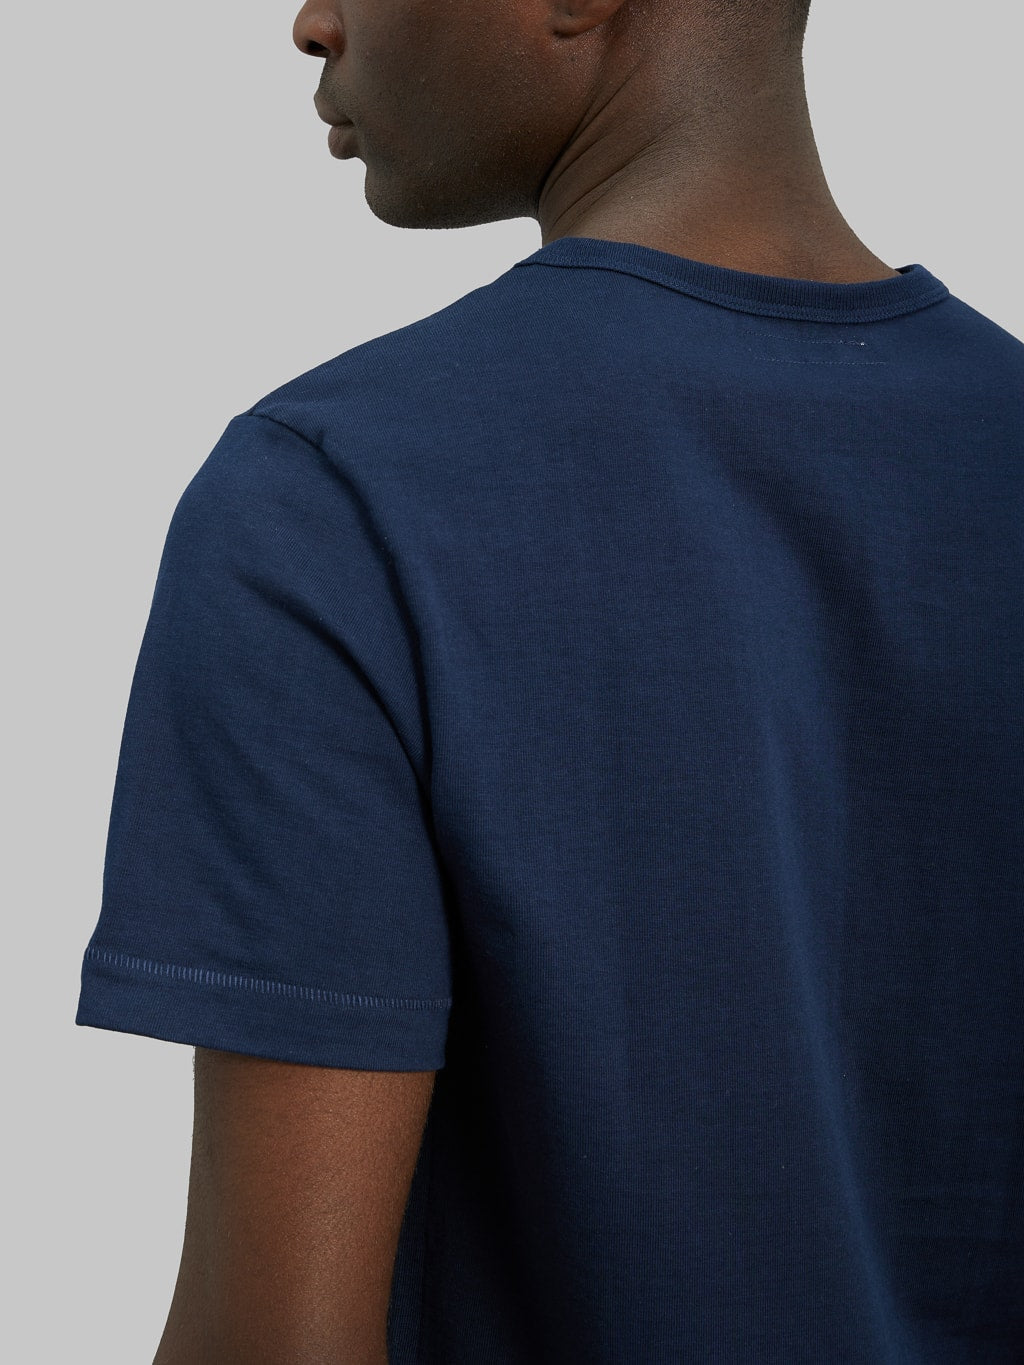 merz b schwanen good originals loopwheeled Tshirt classic fit blue back details